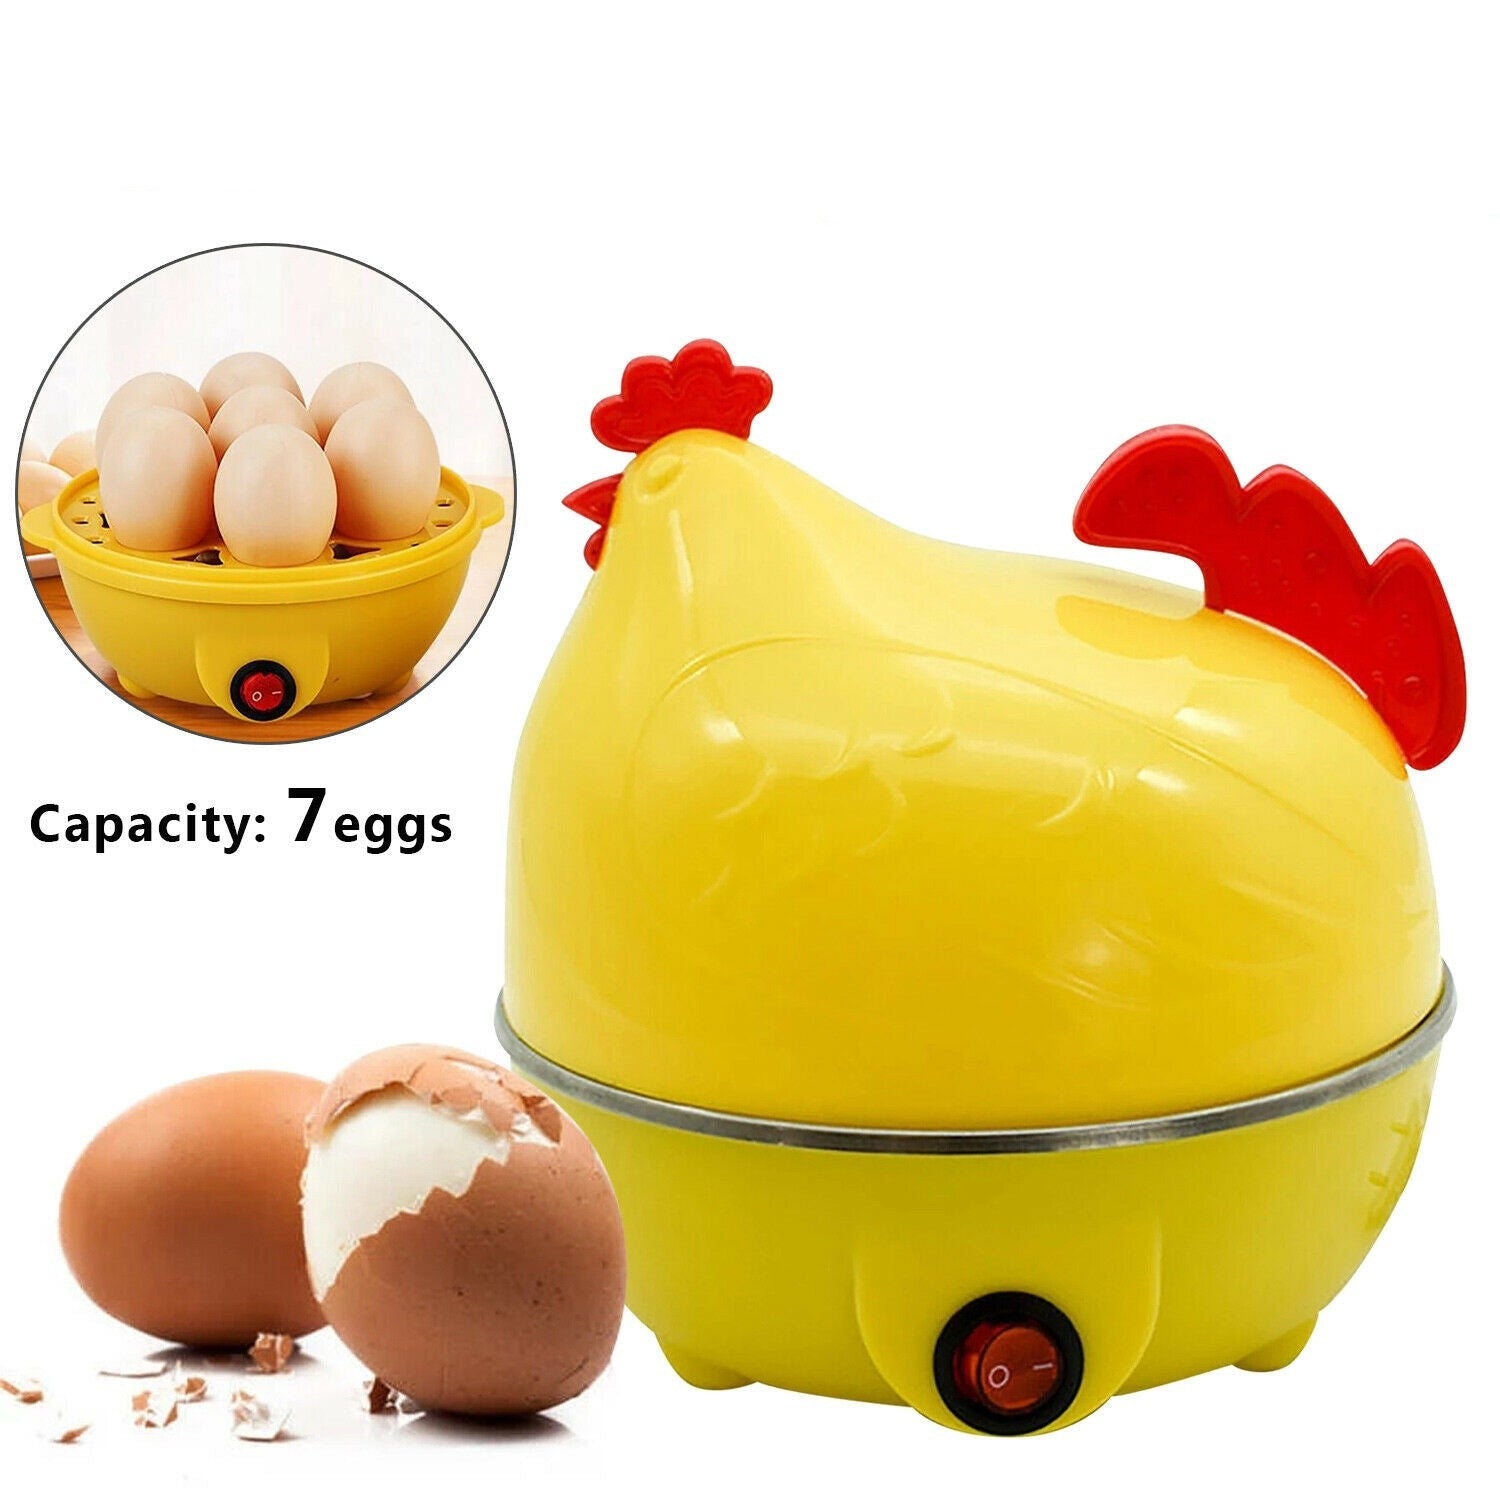 Electric Cooking Eggs, Electric Egg Cooker, Egg Boiler Steamer